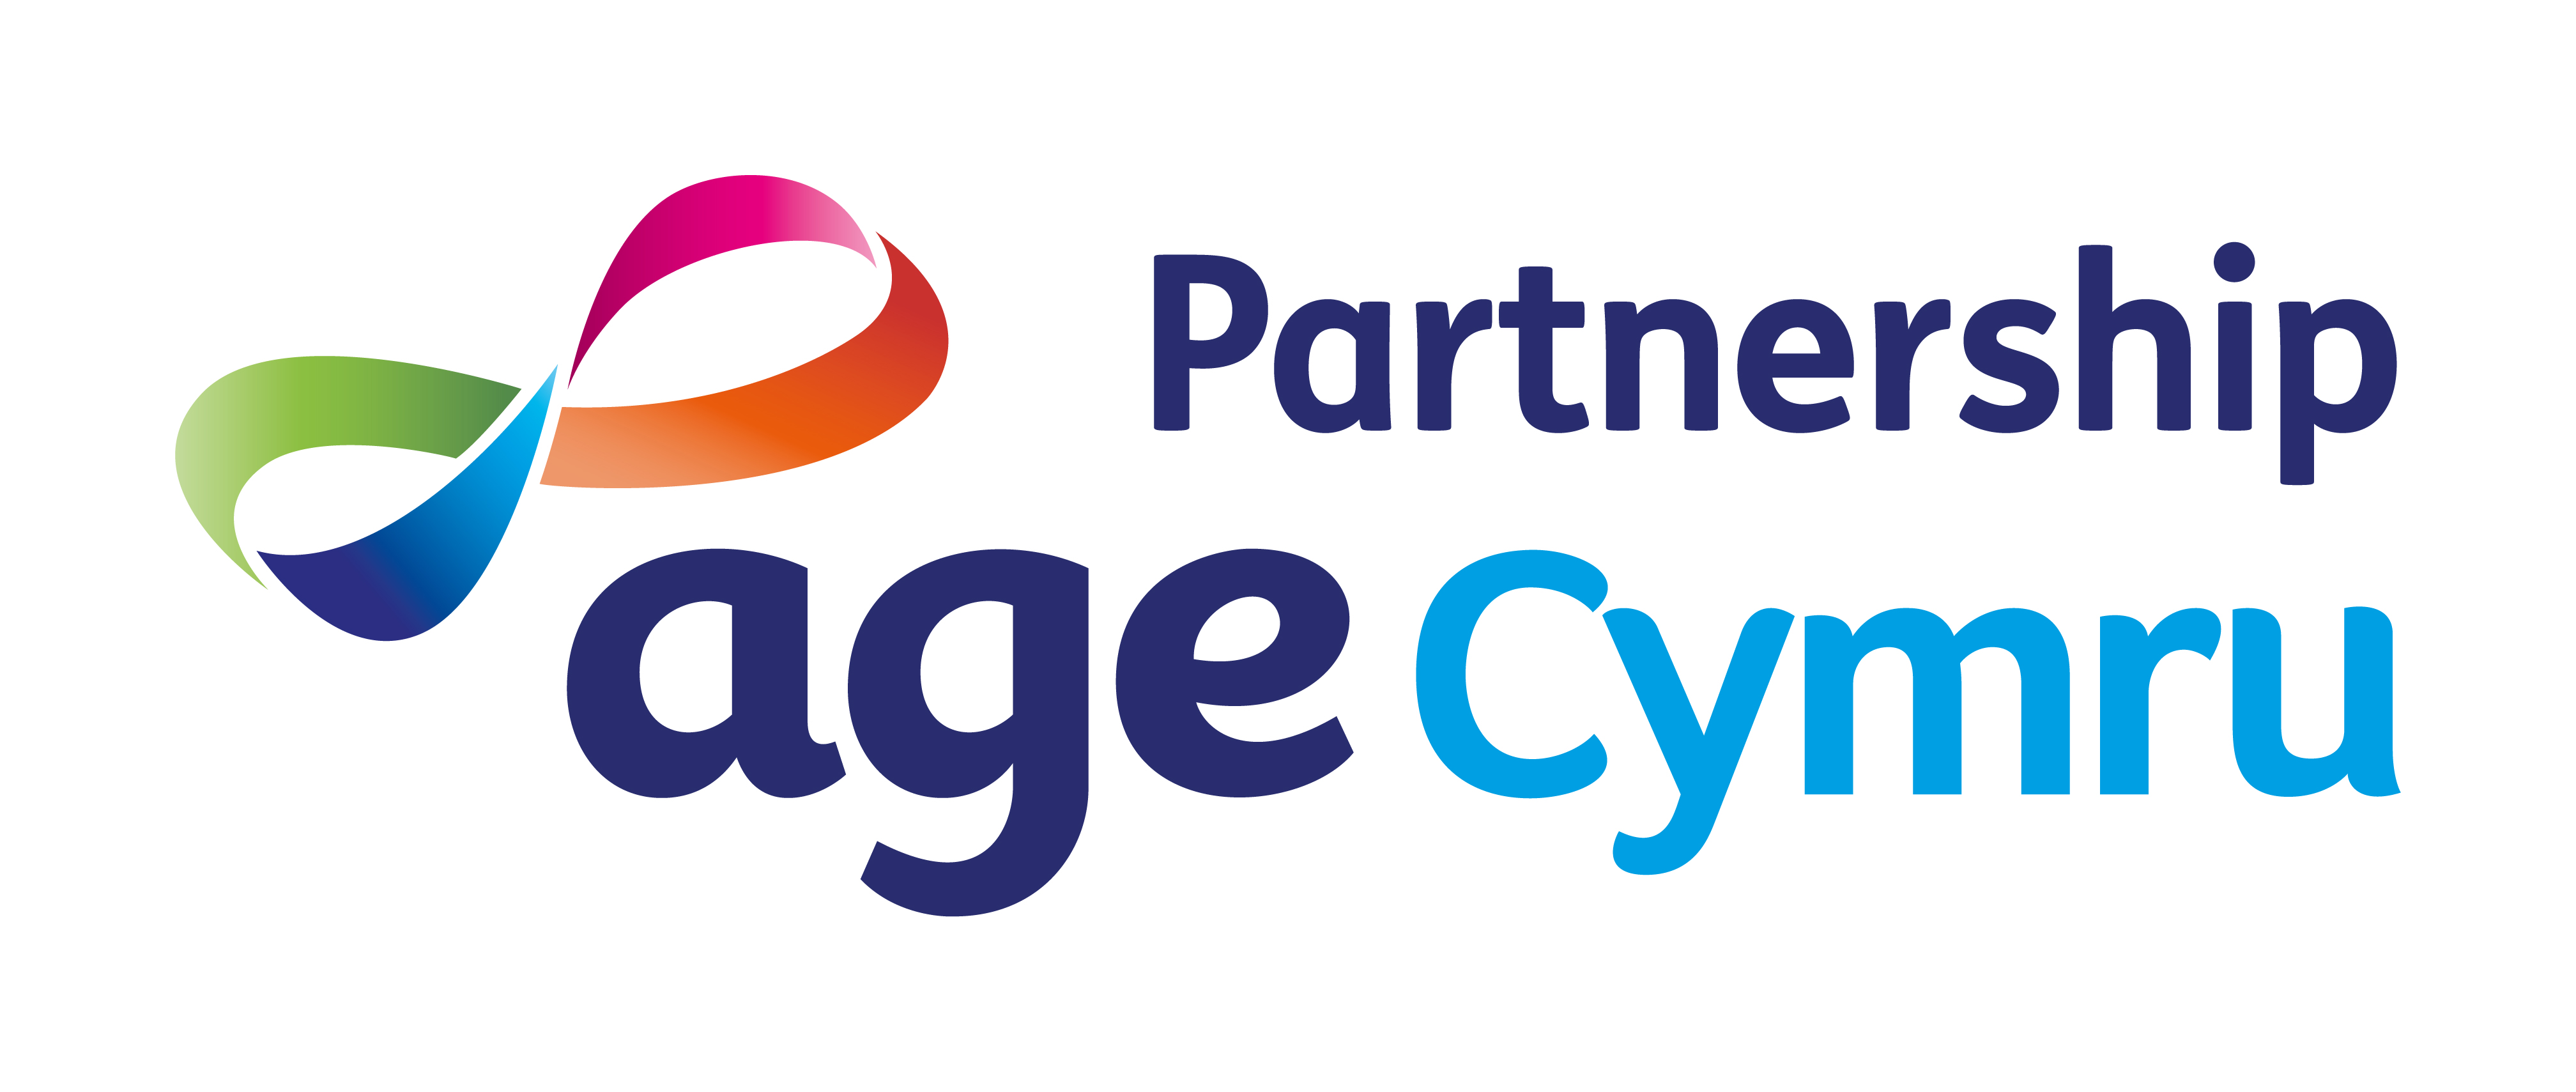 Age Cymru Partnership logo